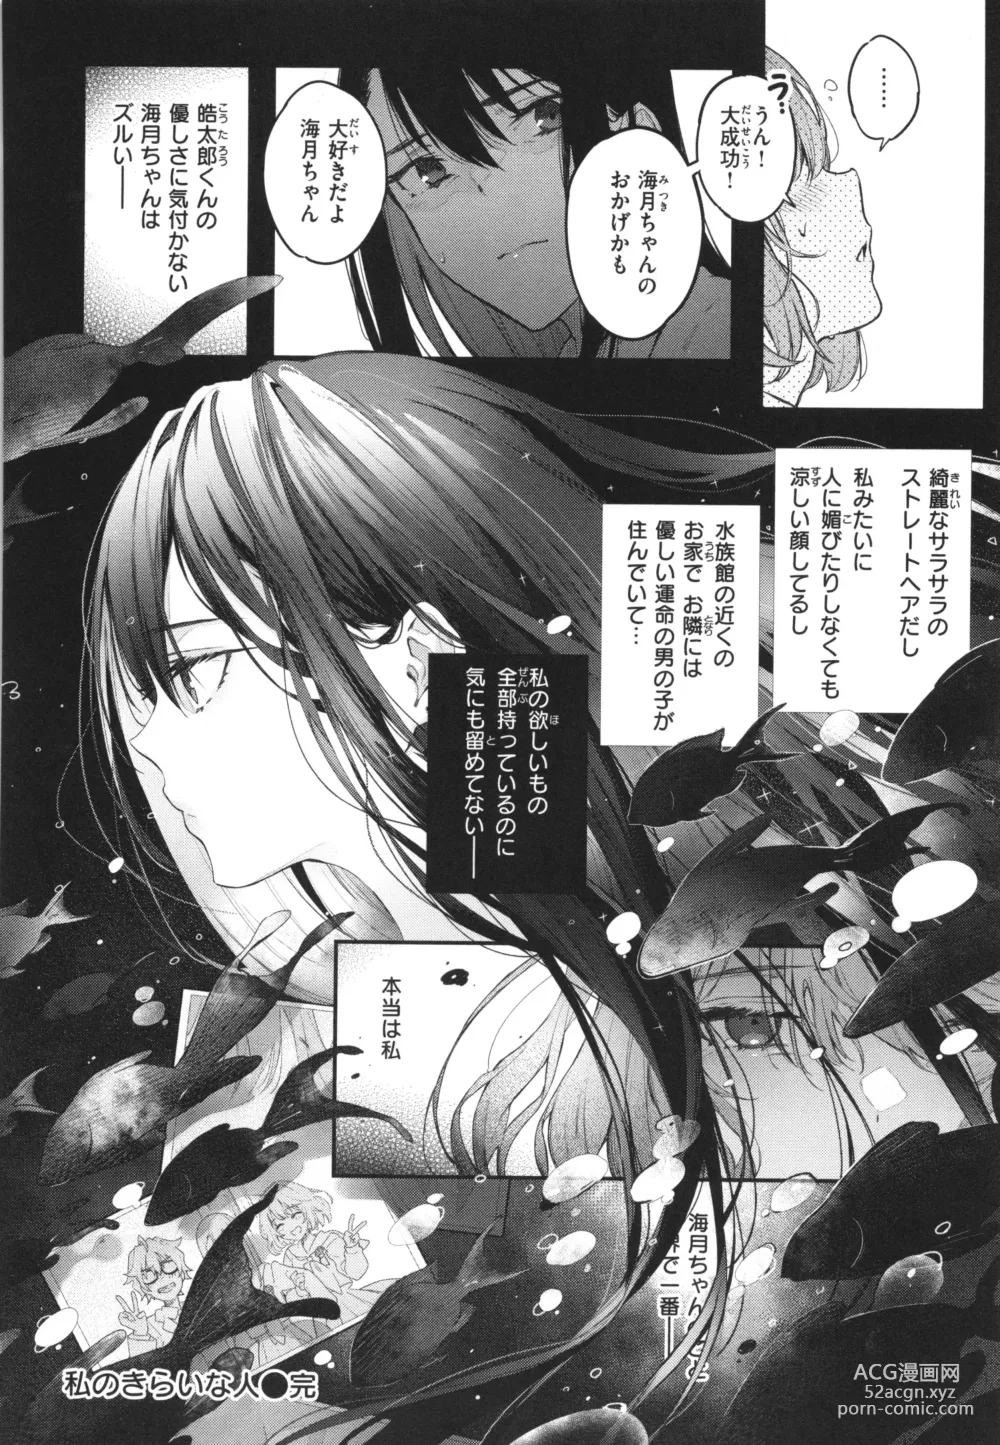 Page 241 of manga Katakoi Fragment